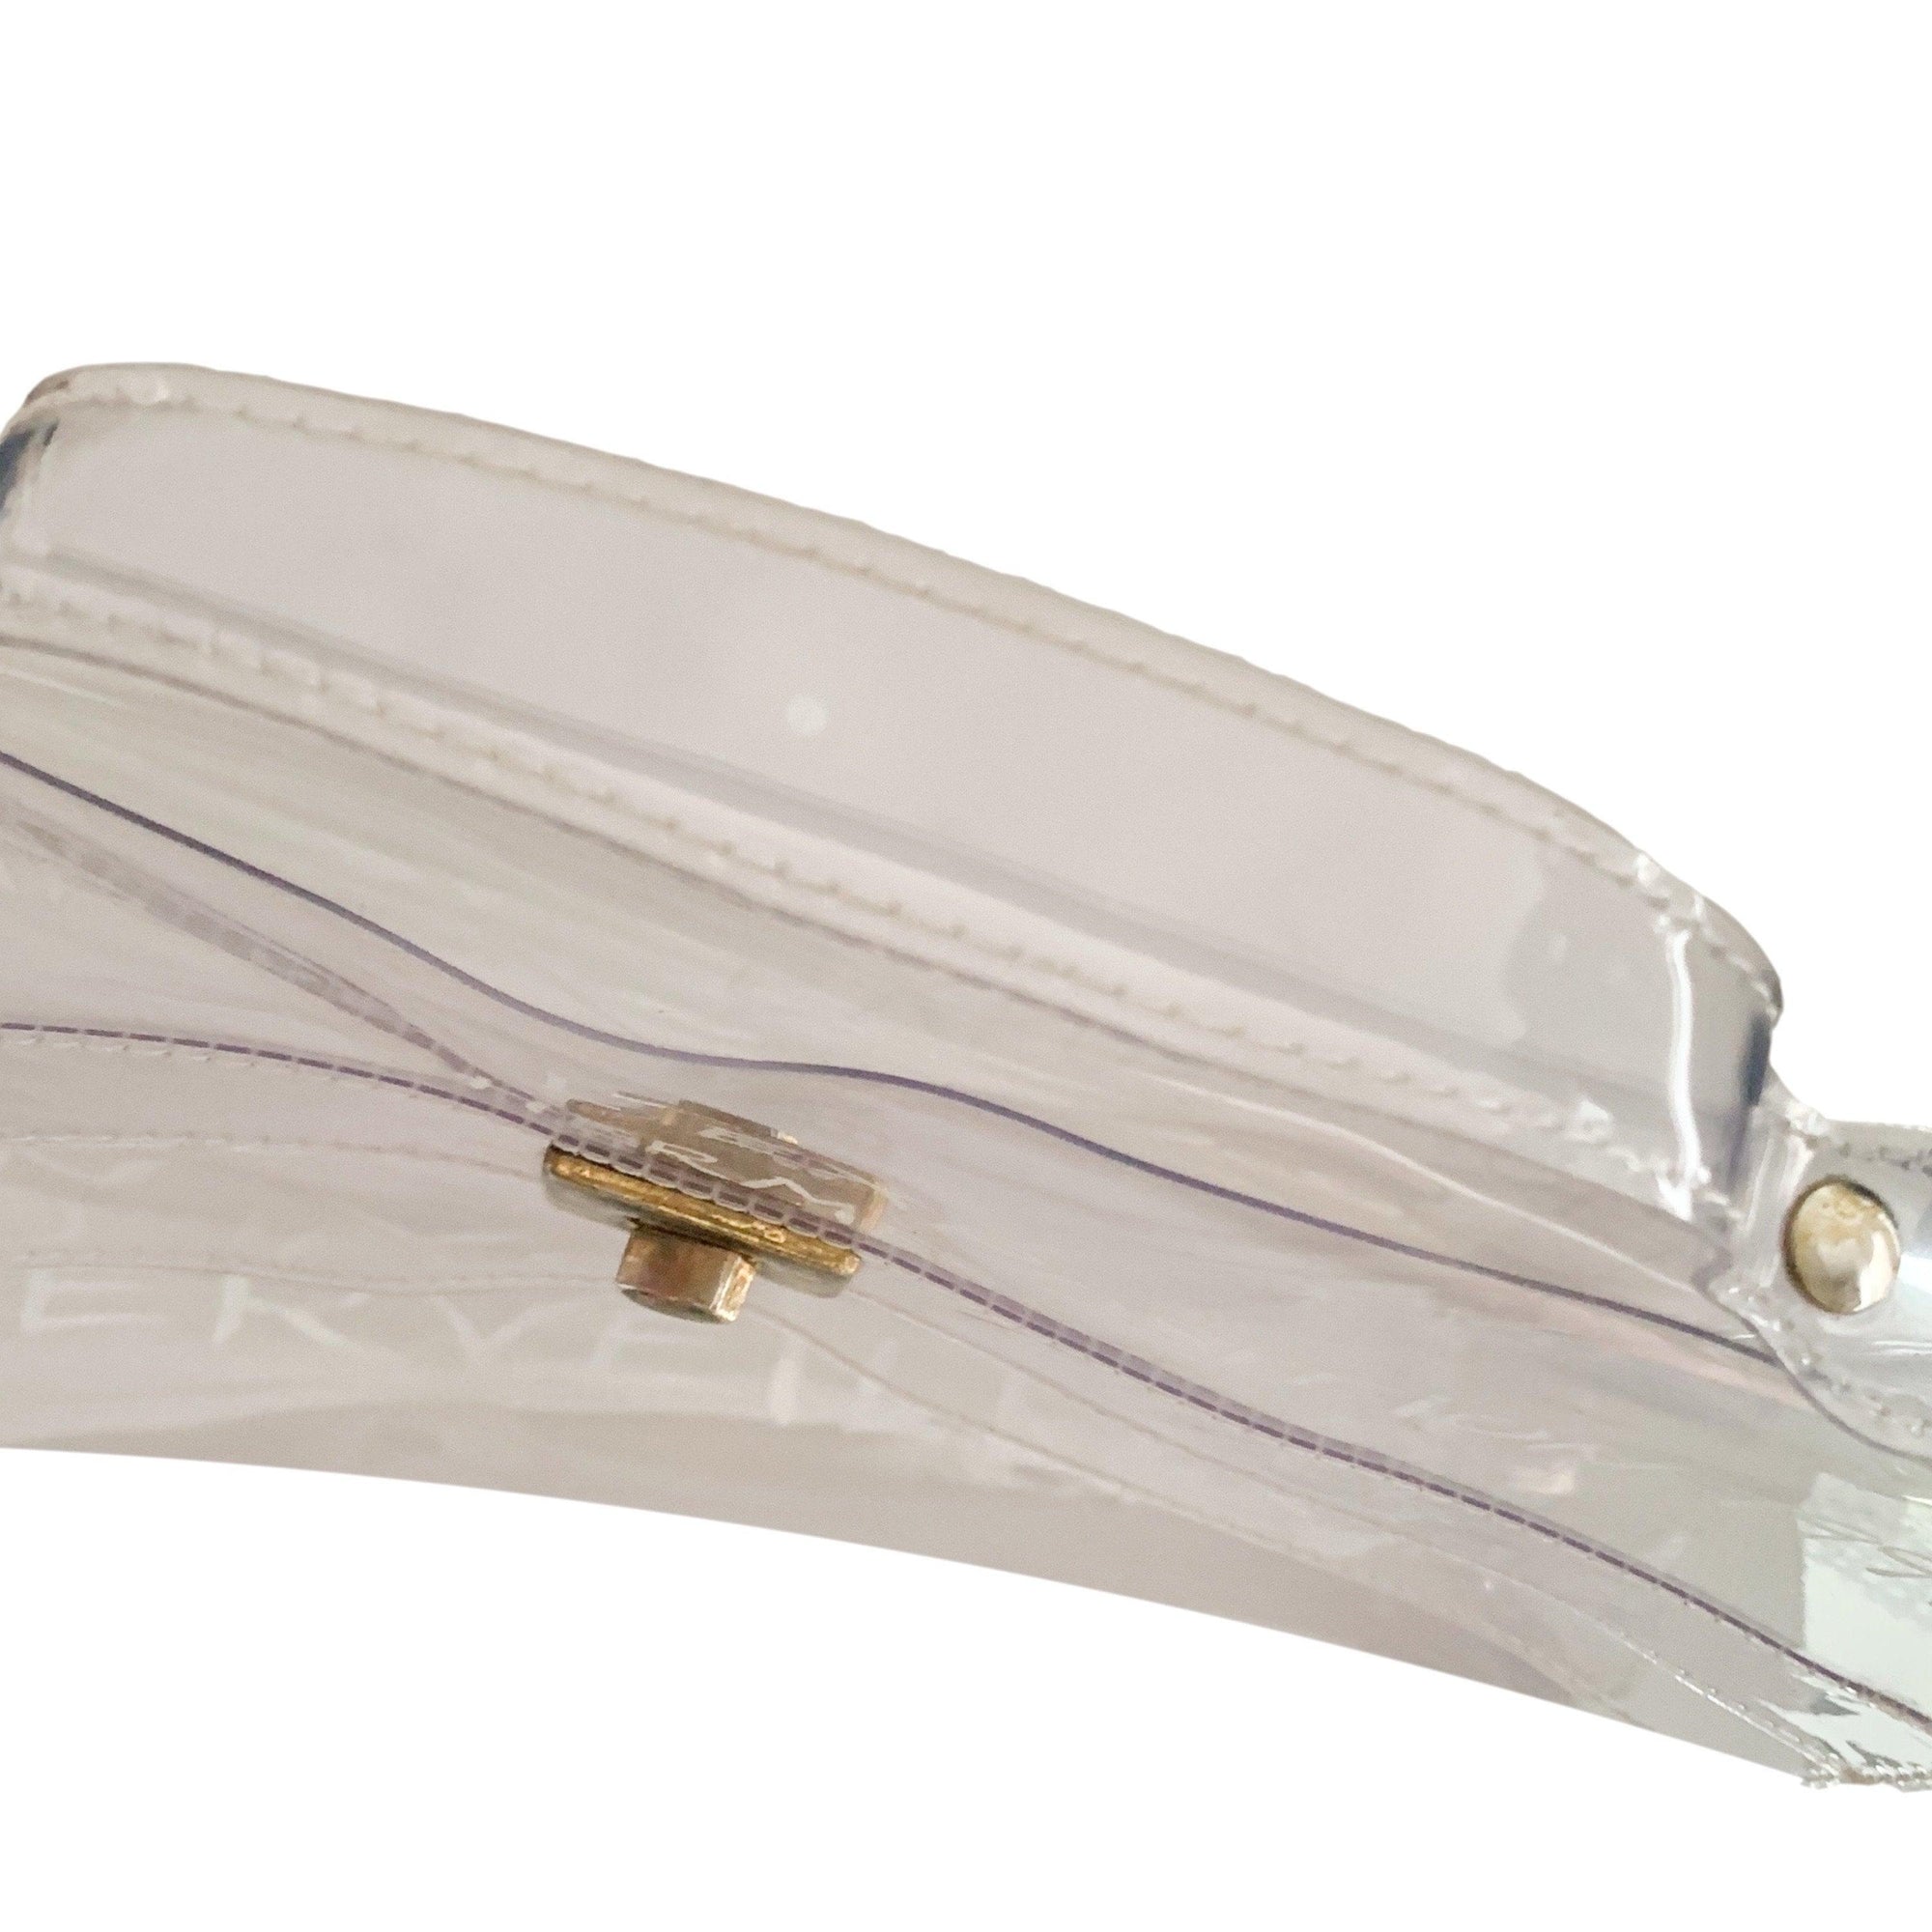 Hermes Transparent Kelly Bag - Handbags